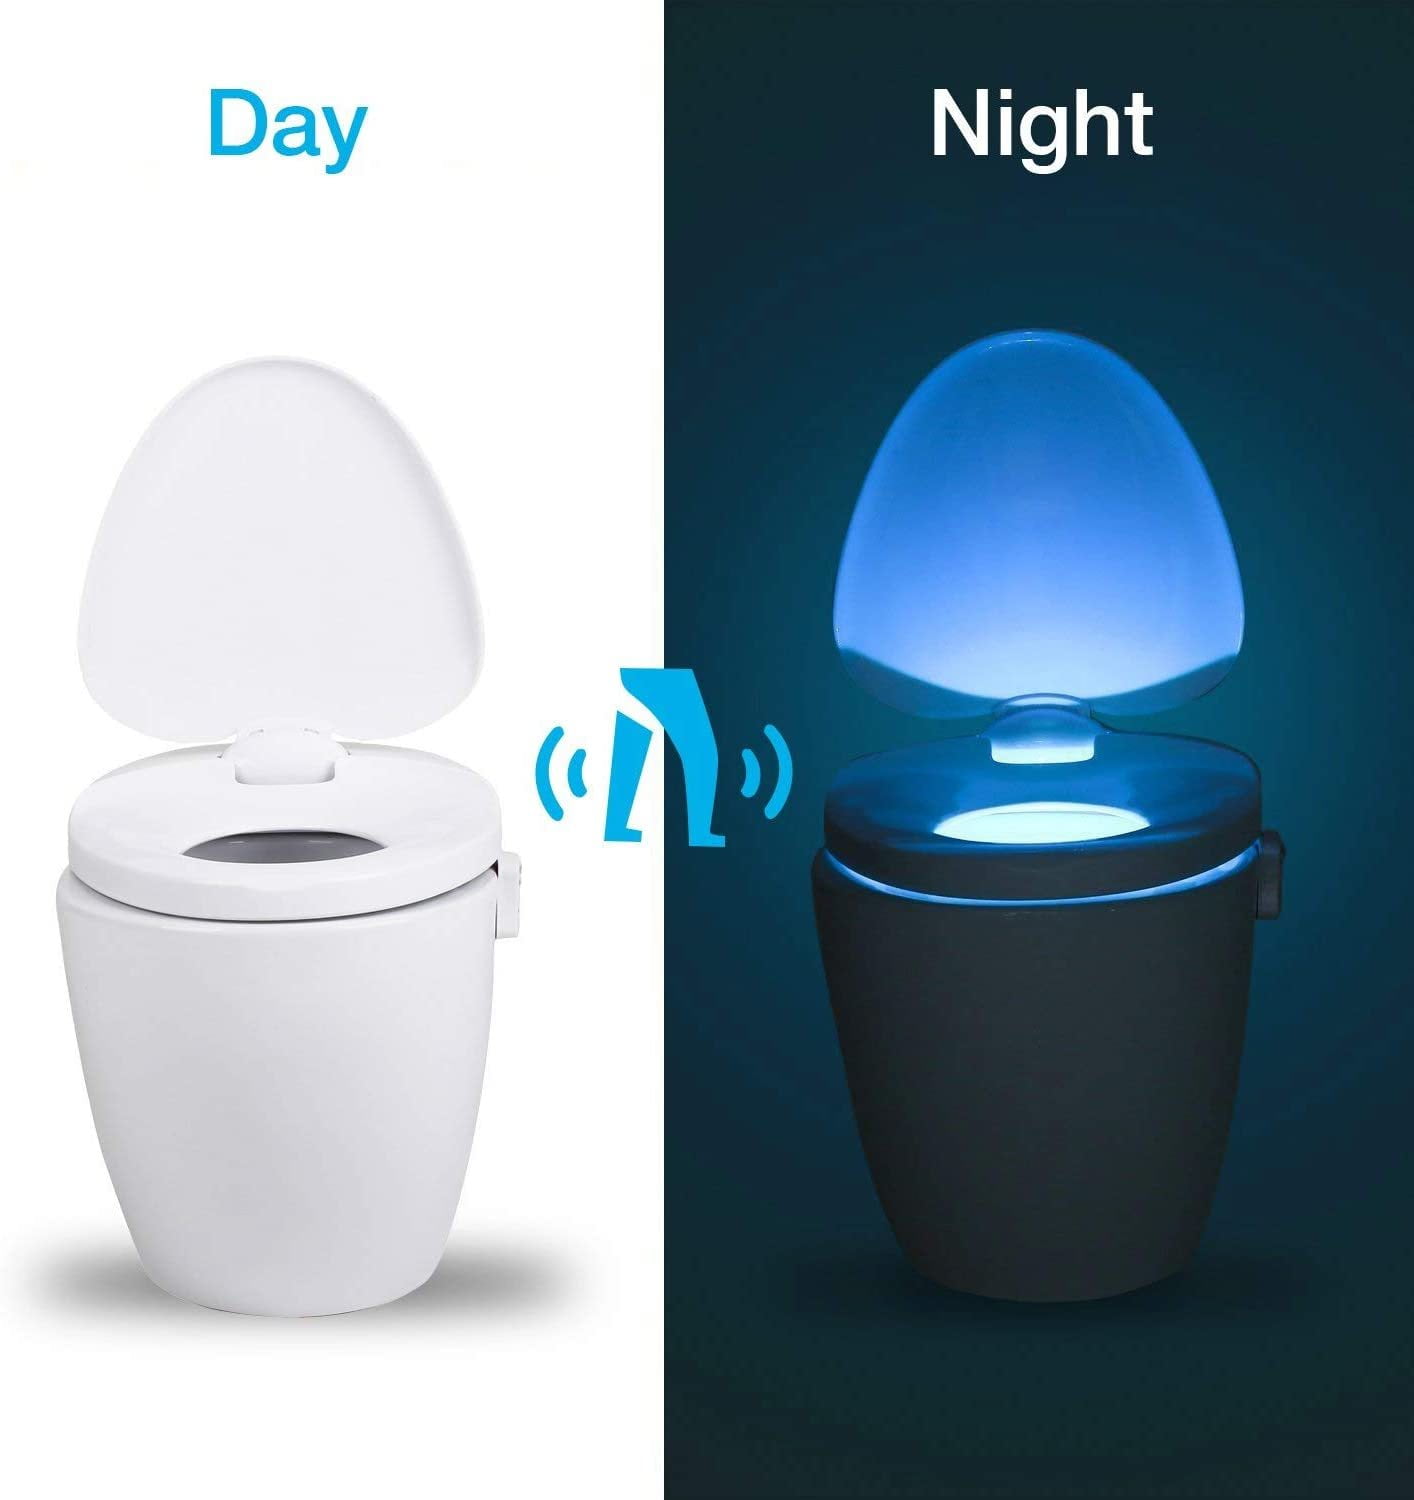 RainBowl Toilet Light with Motion Sensor - Unique Cool Gadget - LED Toilet  Bowl Night Light - Funny …See more RainBowl Toilet Light with Motion Sensor